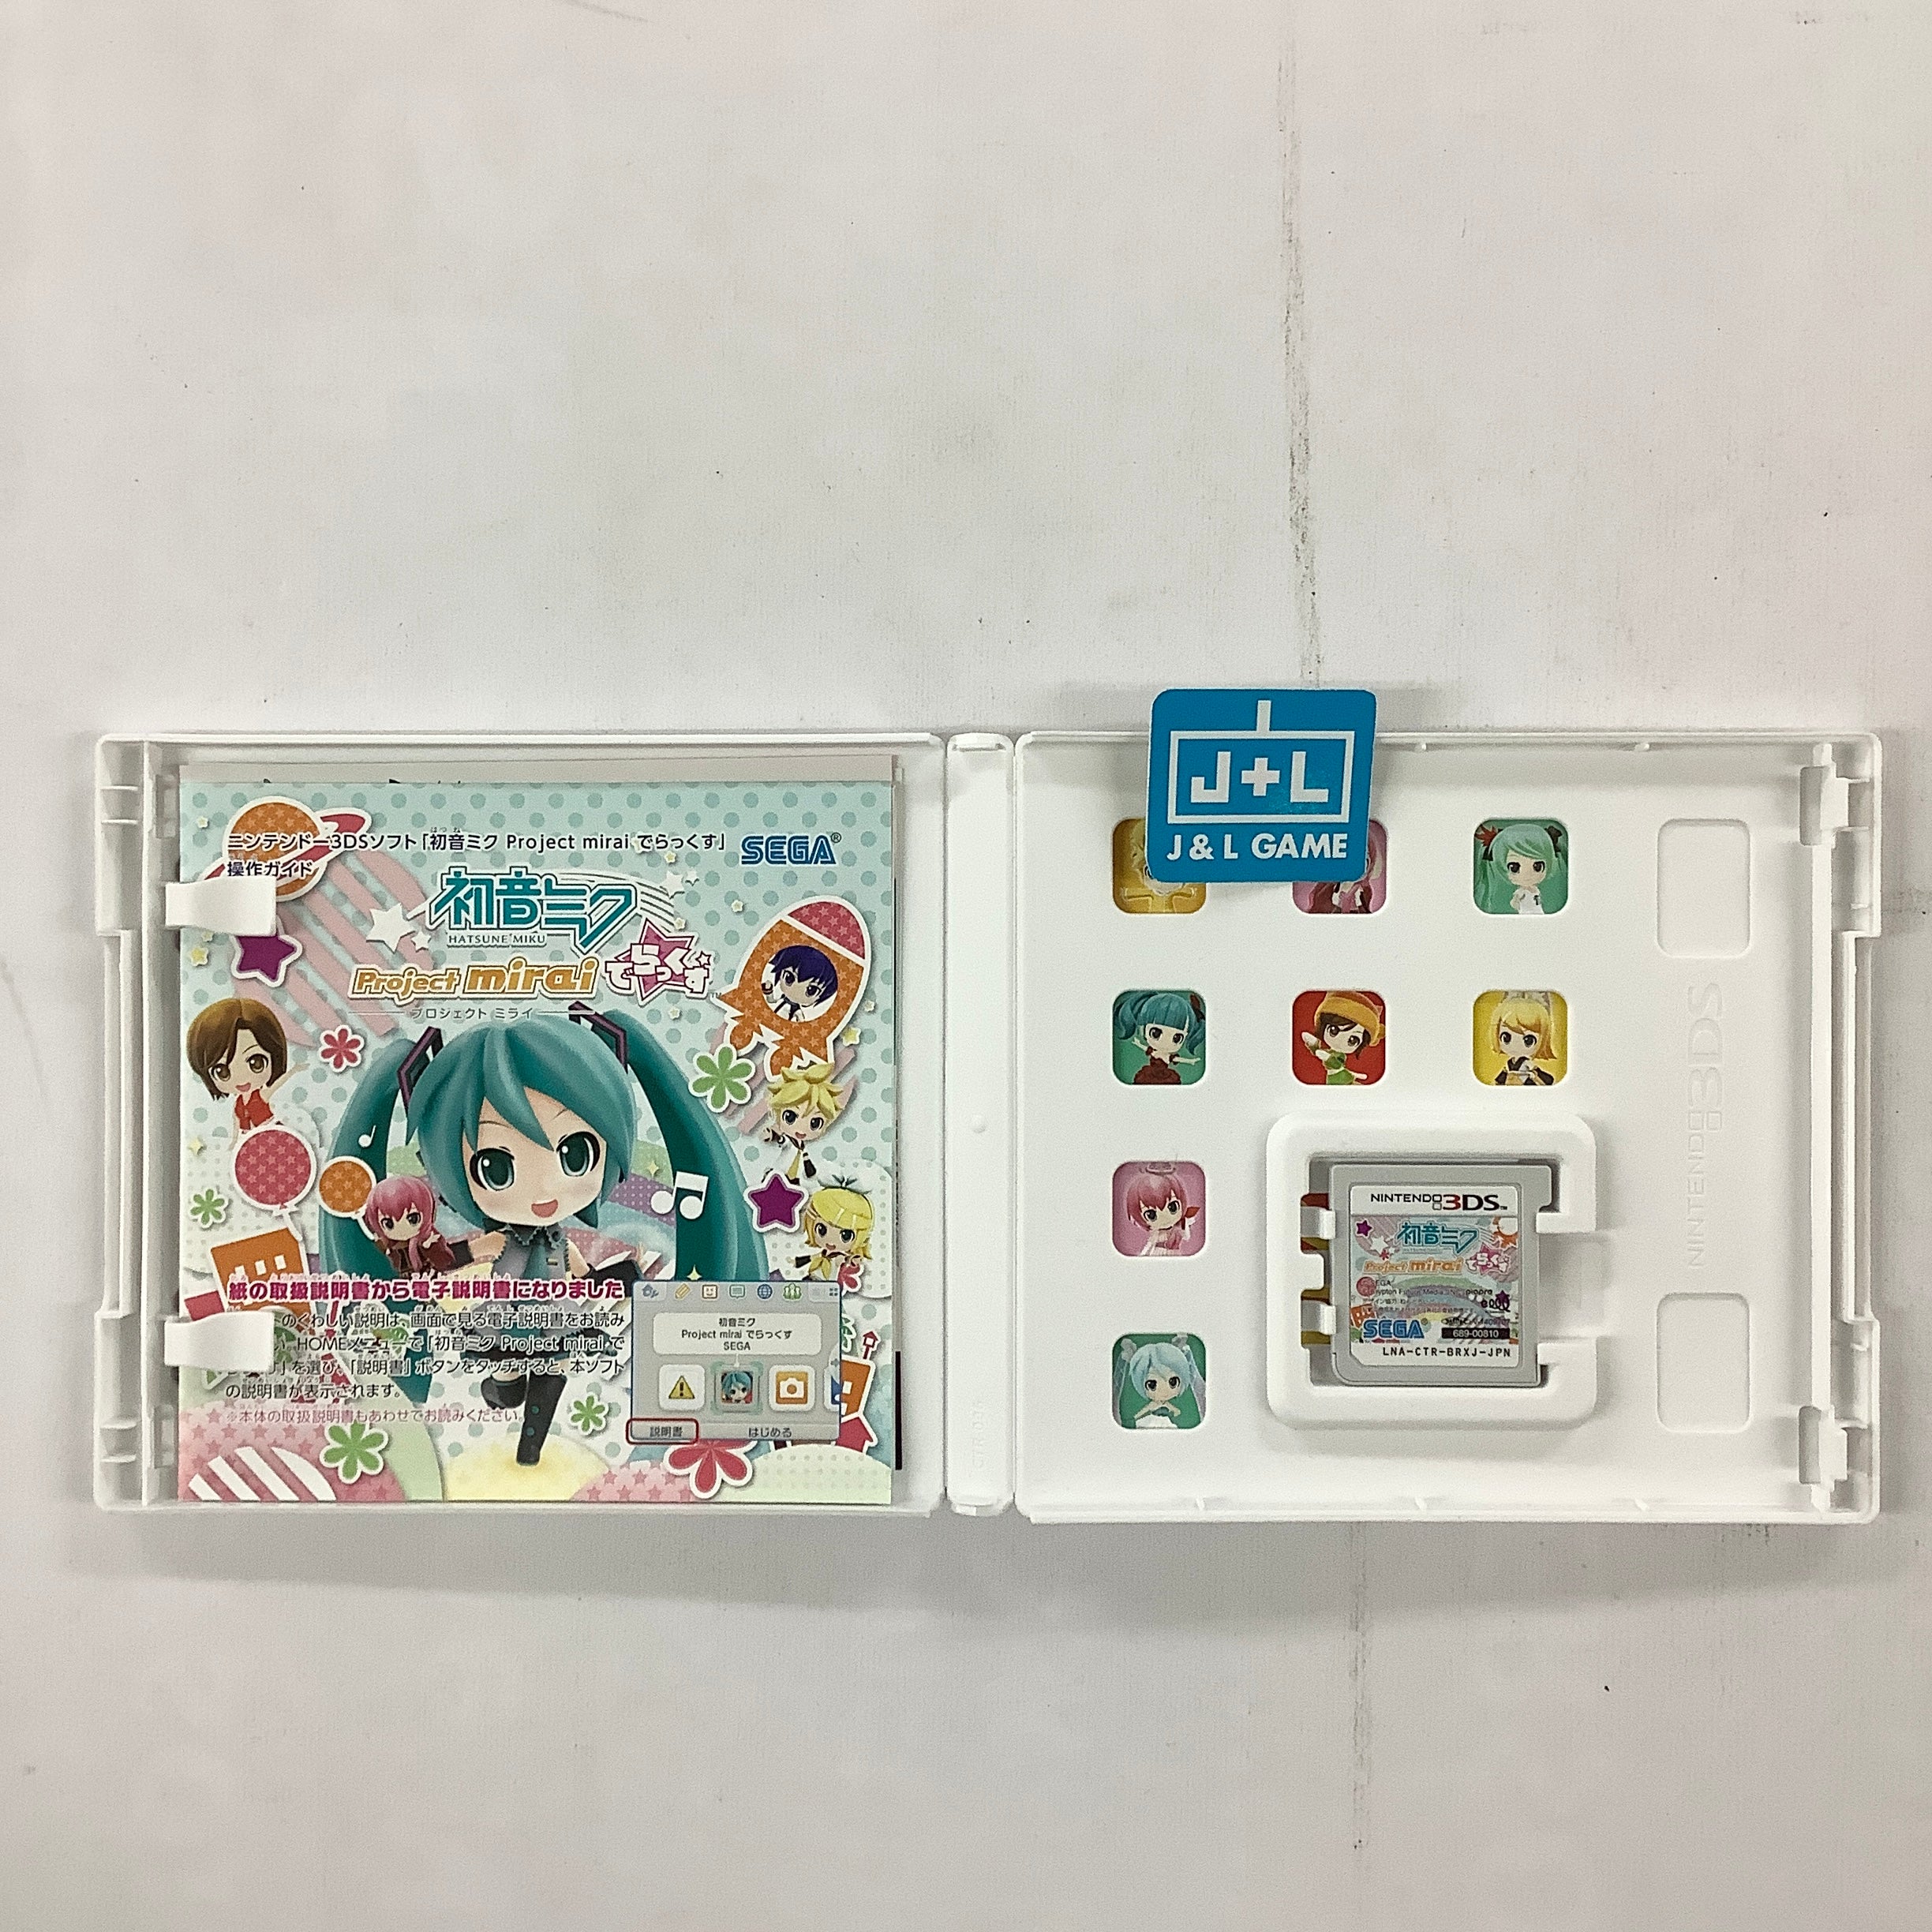 Hatsune Miku: Project Mirai Deluxe - Nintendo 3DS [Pre-Owned] (Japanese Import) Video Games Sega   